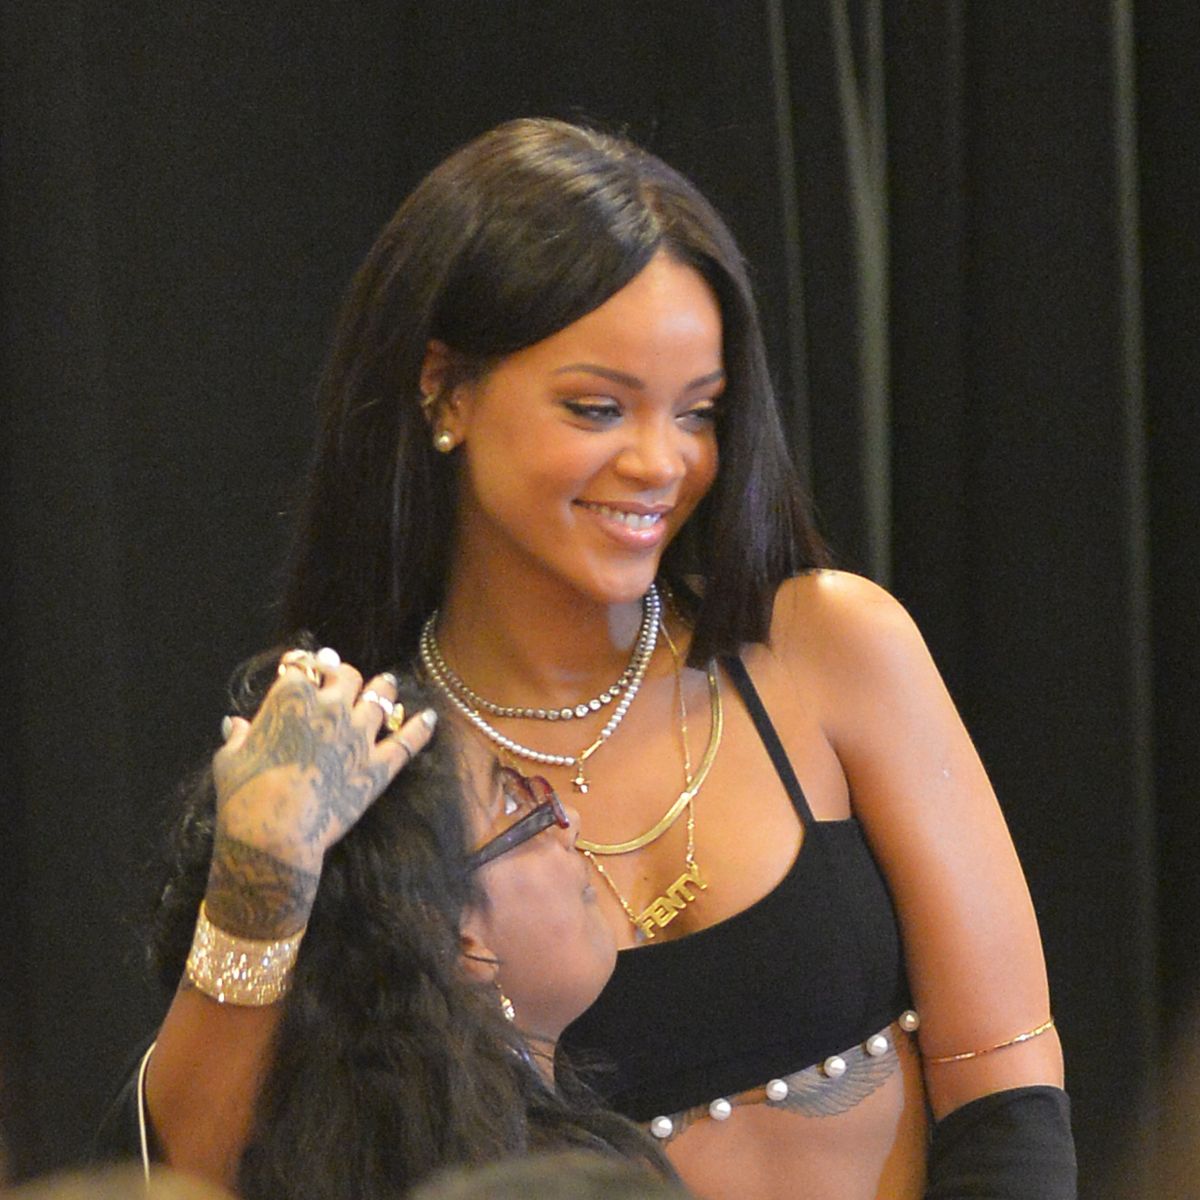 Rihanna Rogue Man Fragrance Launch Atlanta